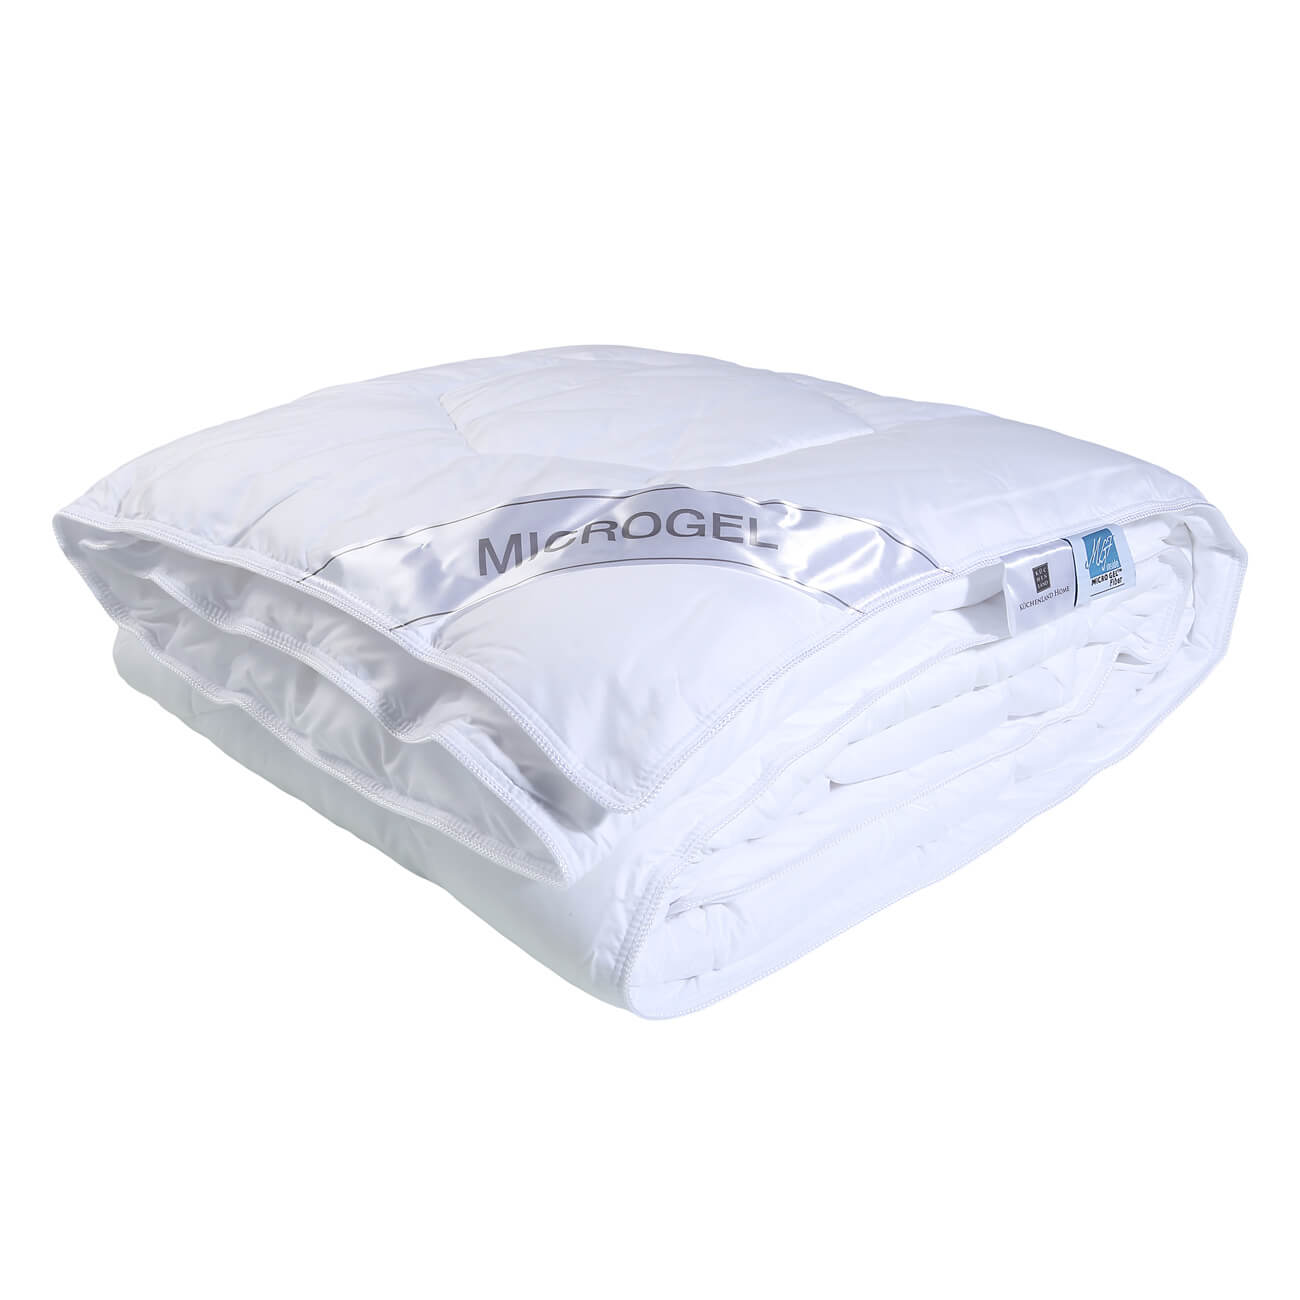 Одеяло, 140х200 см, микрофибра/микрогель, Microgel электрическое одеяло beurer hd75 424 00